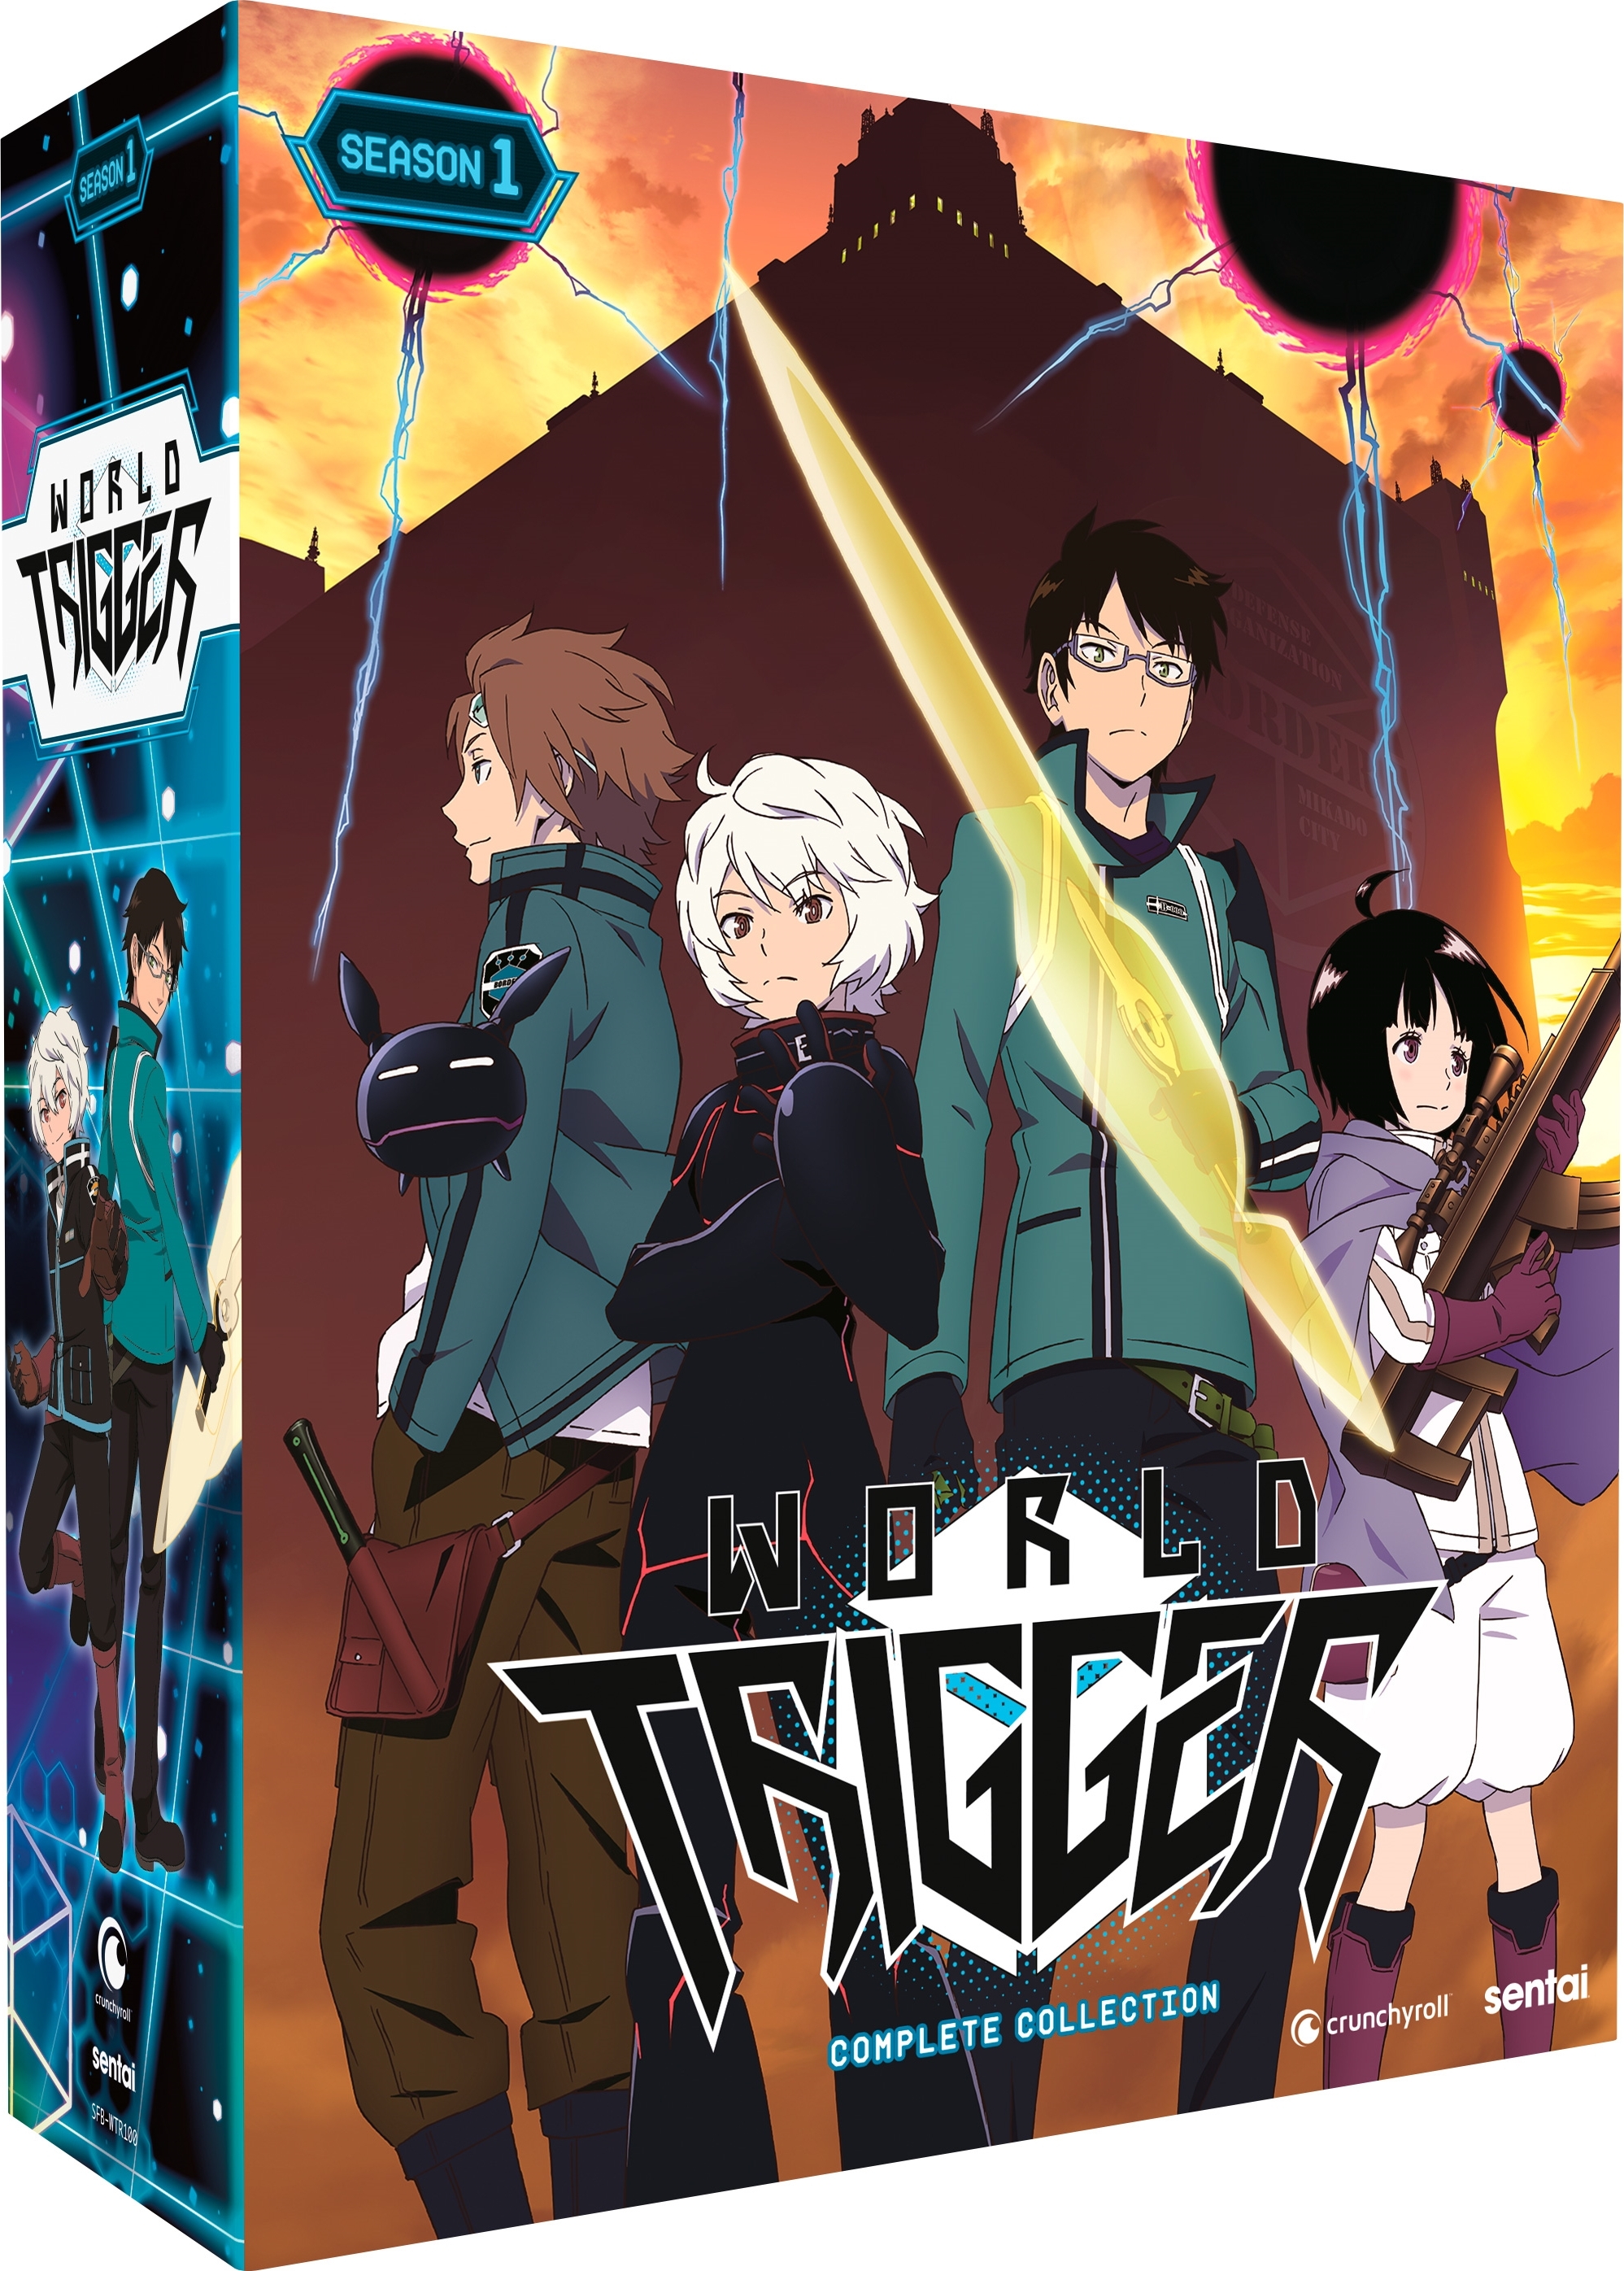 animate】(DVD) World Trigger TV Series 3rd Season VOL. 4【official